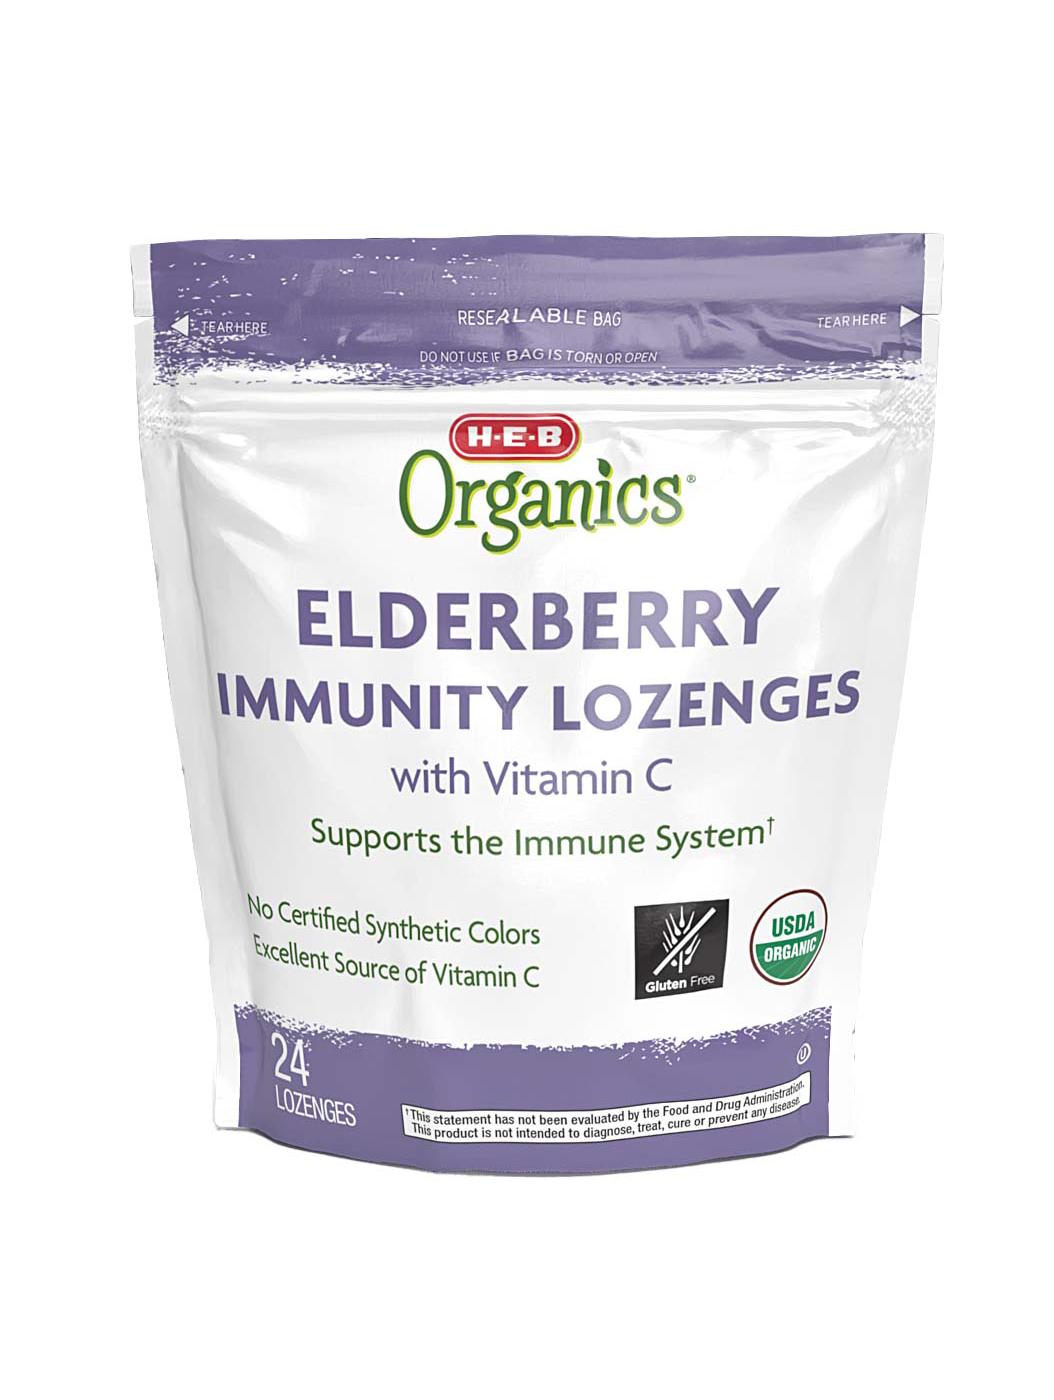 H-E-B Organics Elderberry Immunity Lozenges with Vitamin C; image 1 of 2